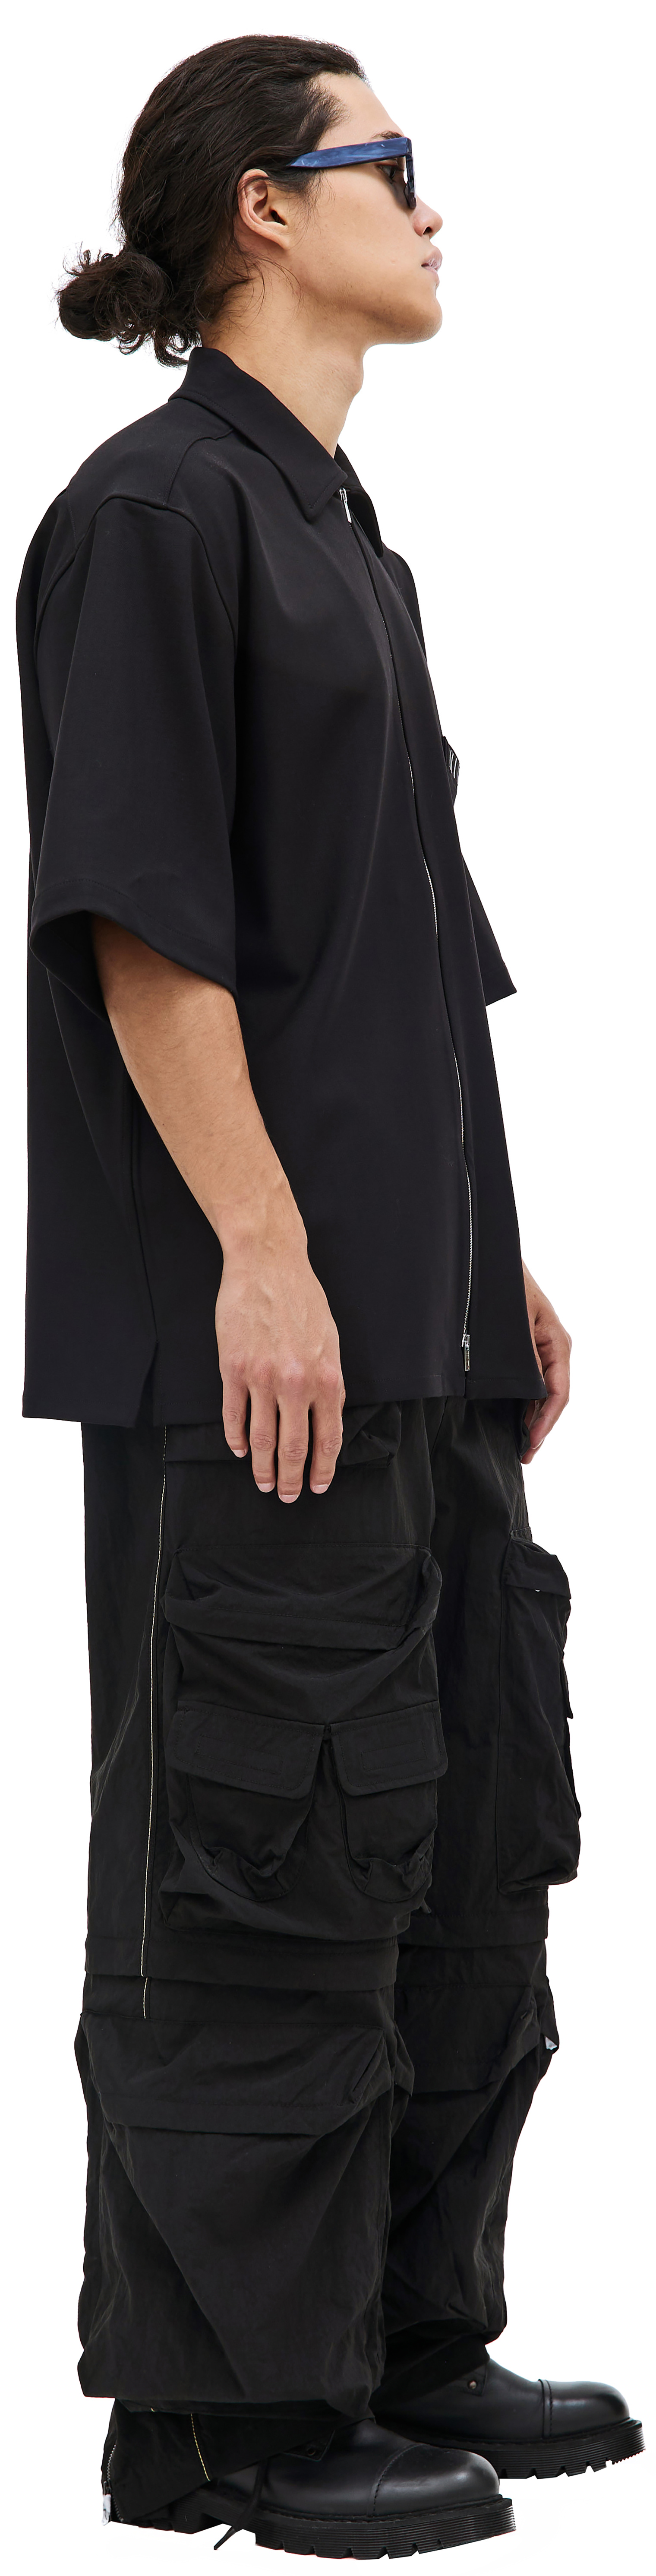 VTMNTS Zip-up short sleeve shirt